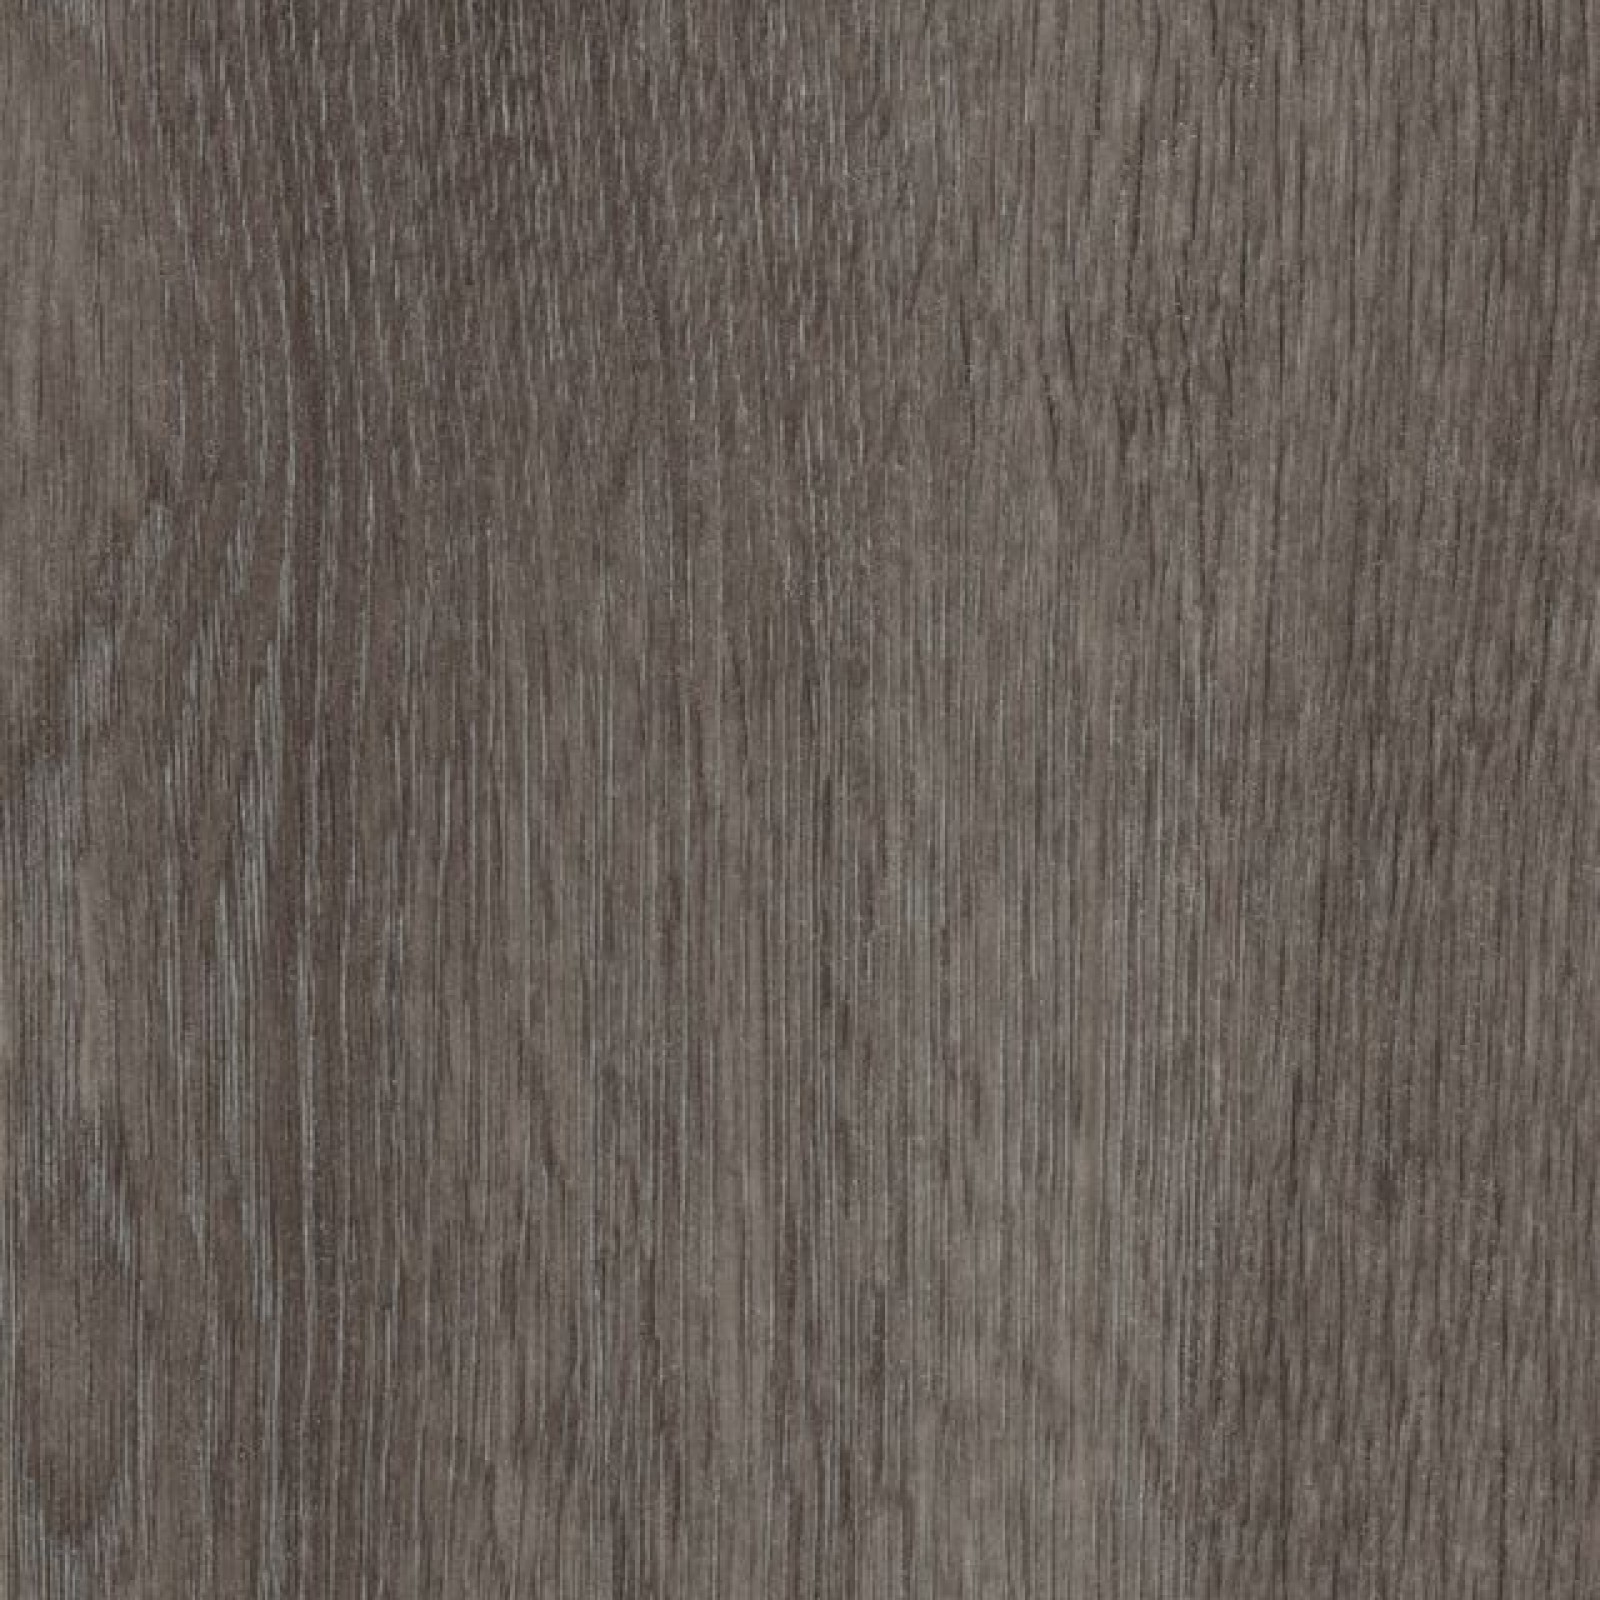 Vzor - 60375FL grey collage oak